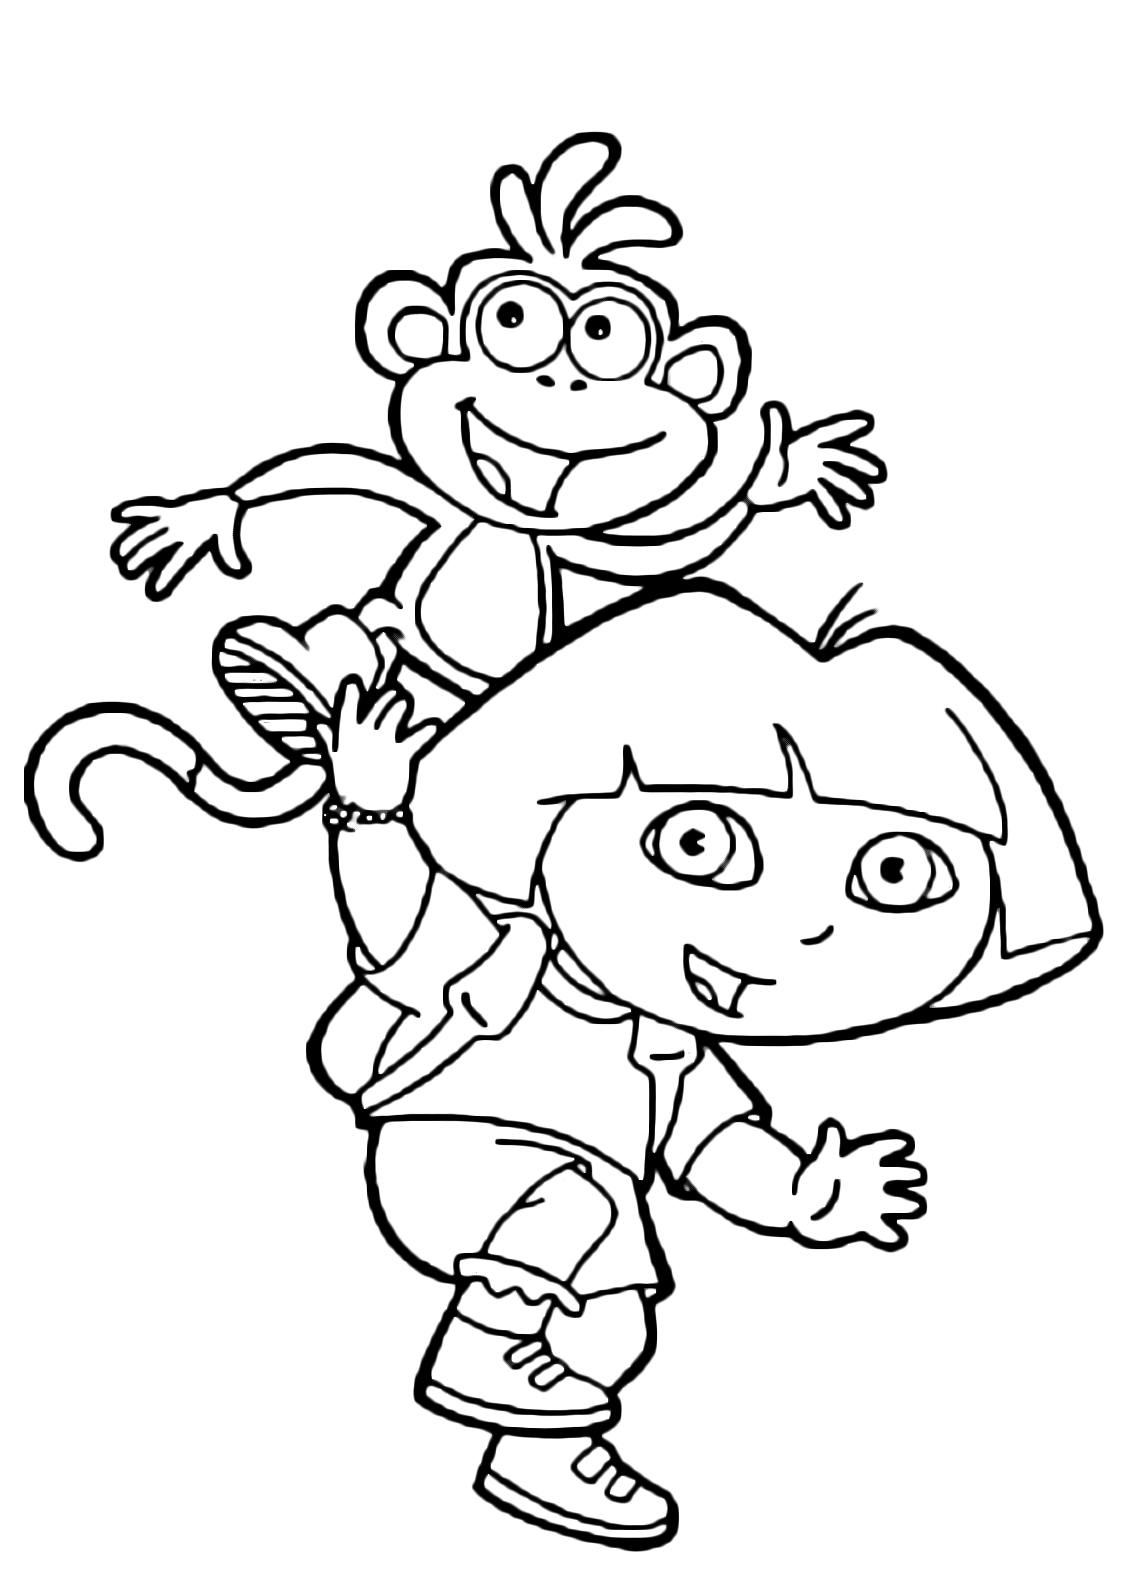 Dora l'esploratrice - Dora e Boots saltano assieme